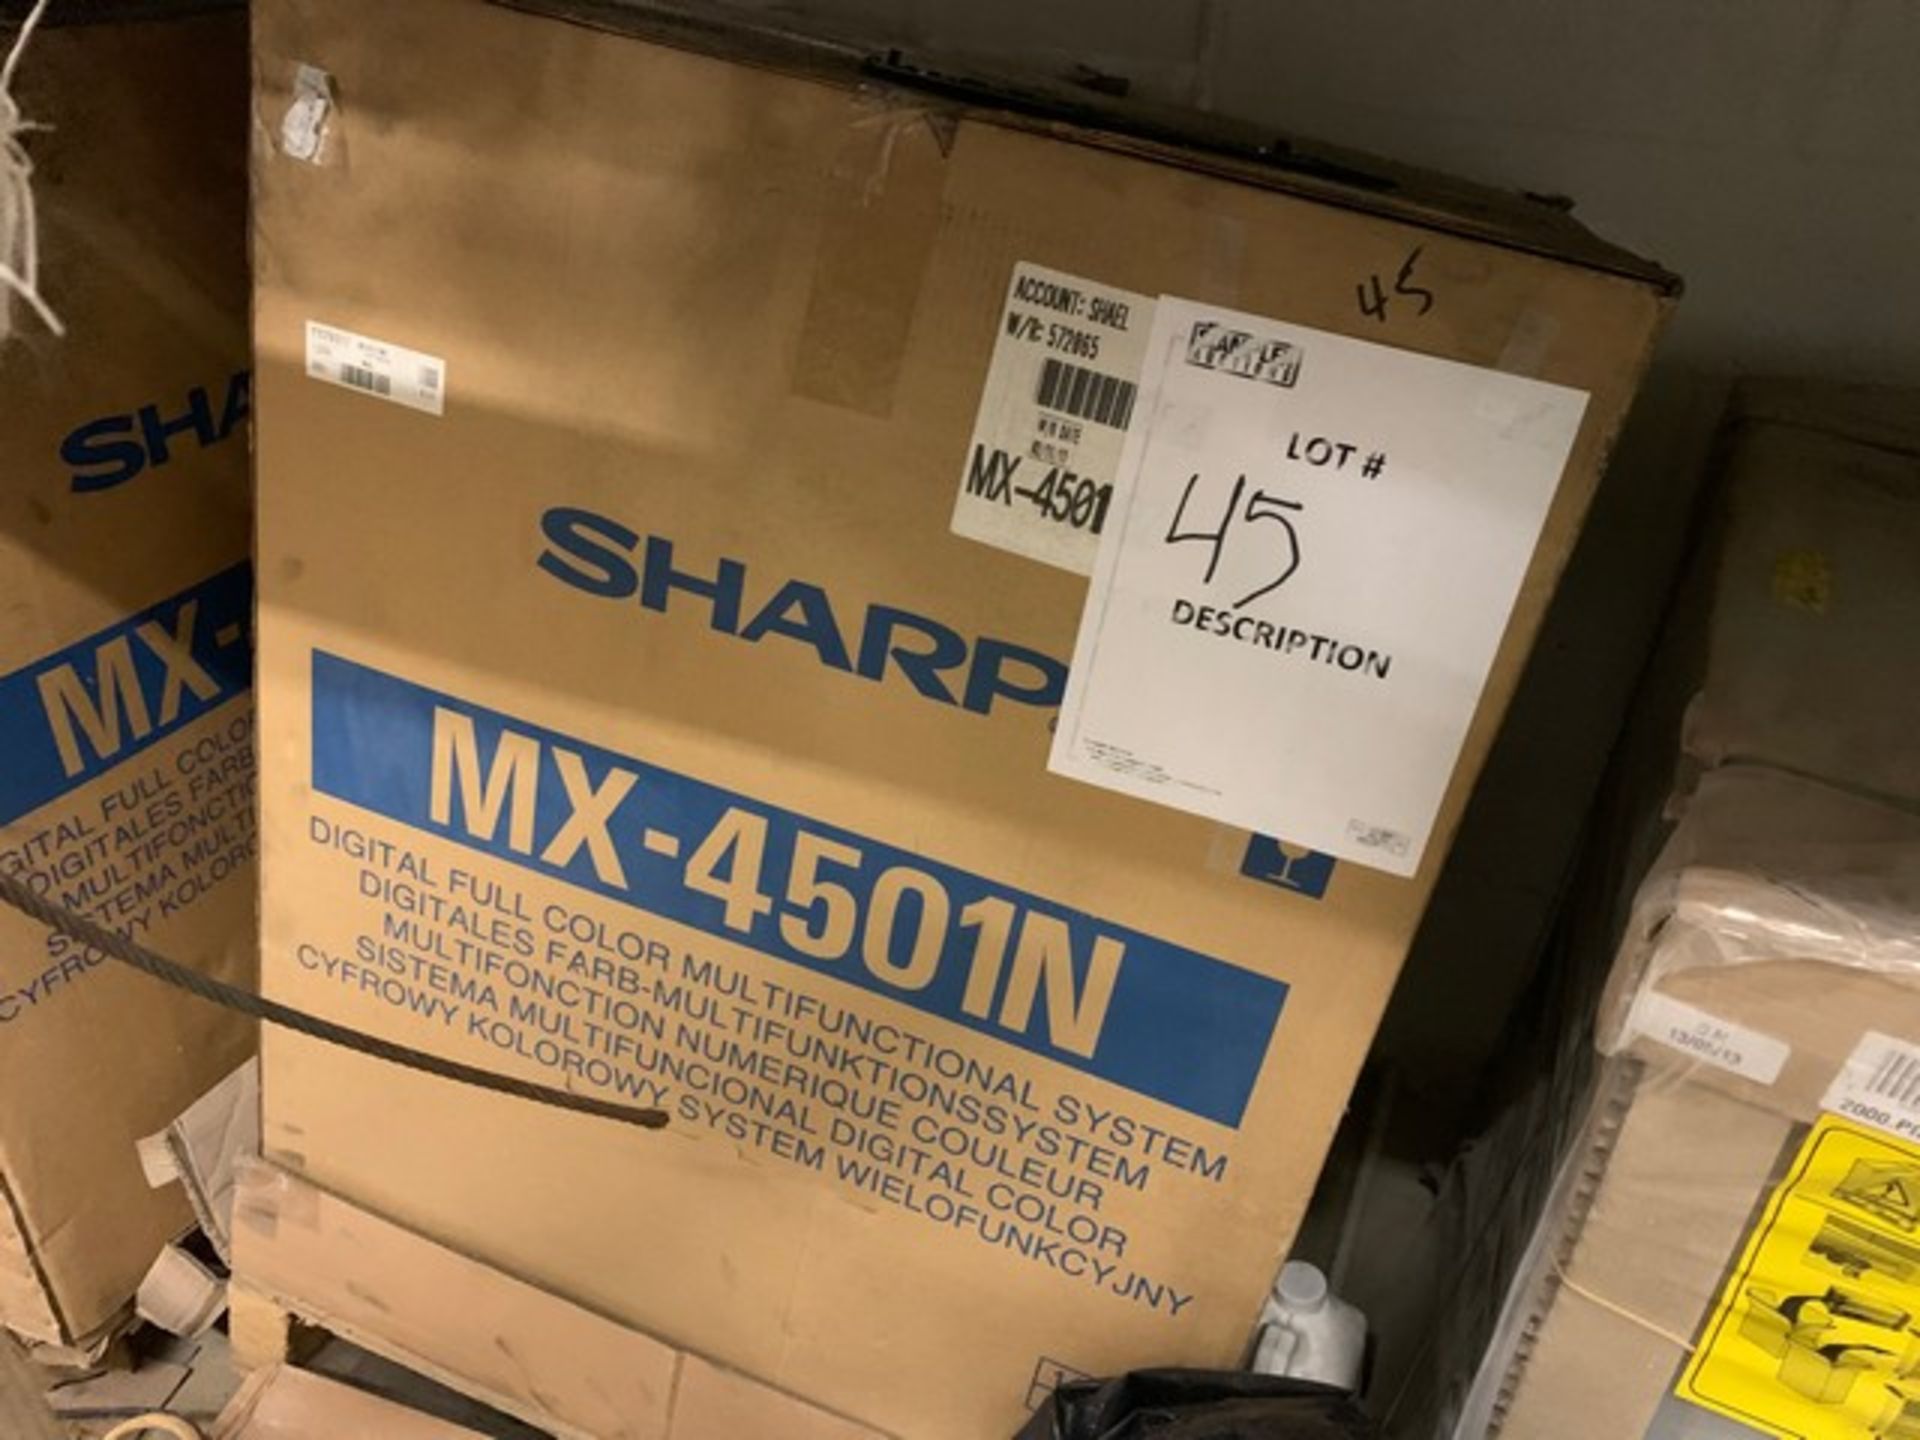 SHARP MX-4501N COPIER (NEW IN BOX)